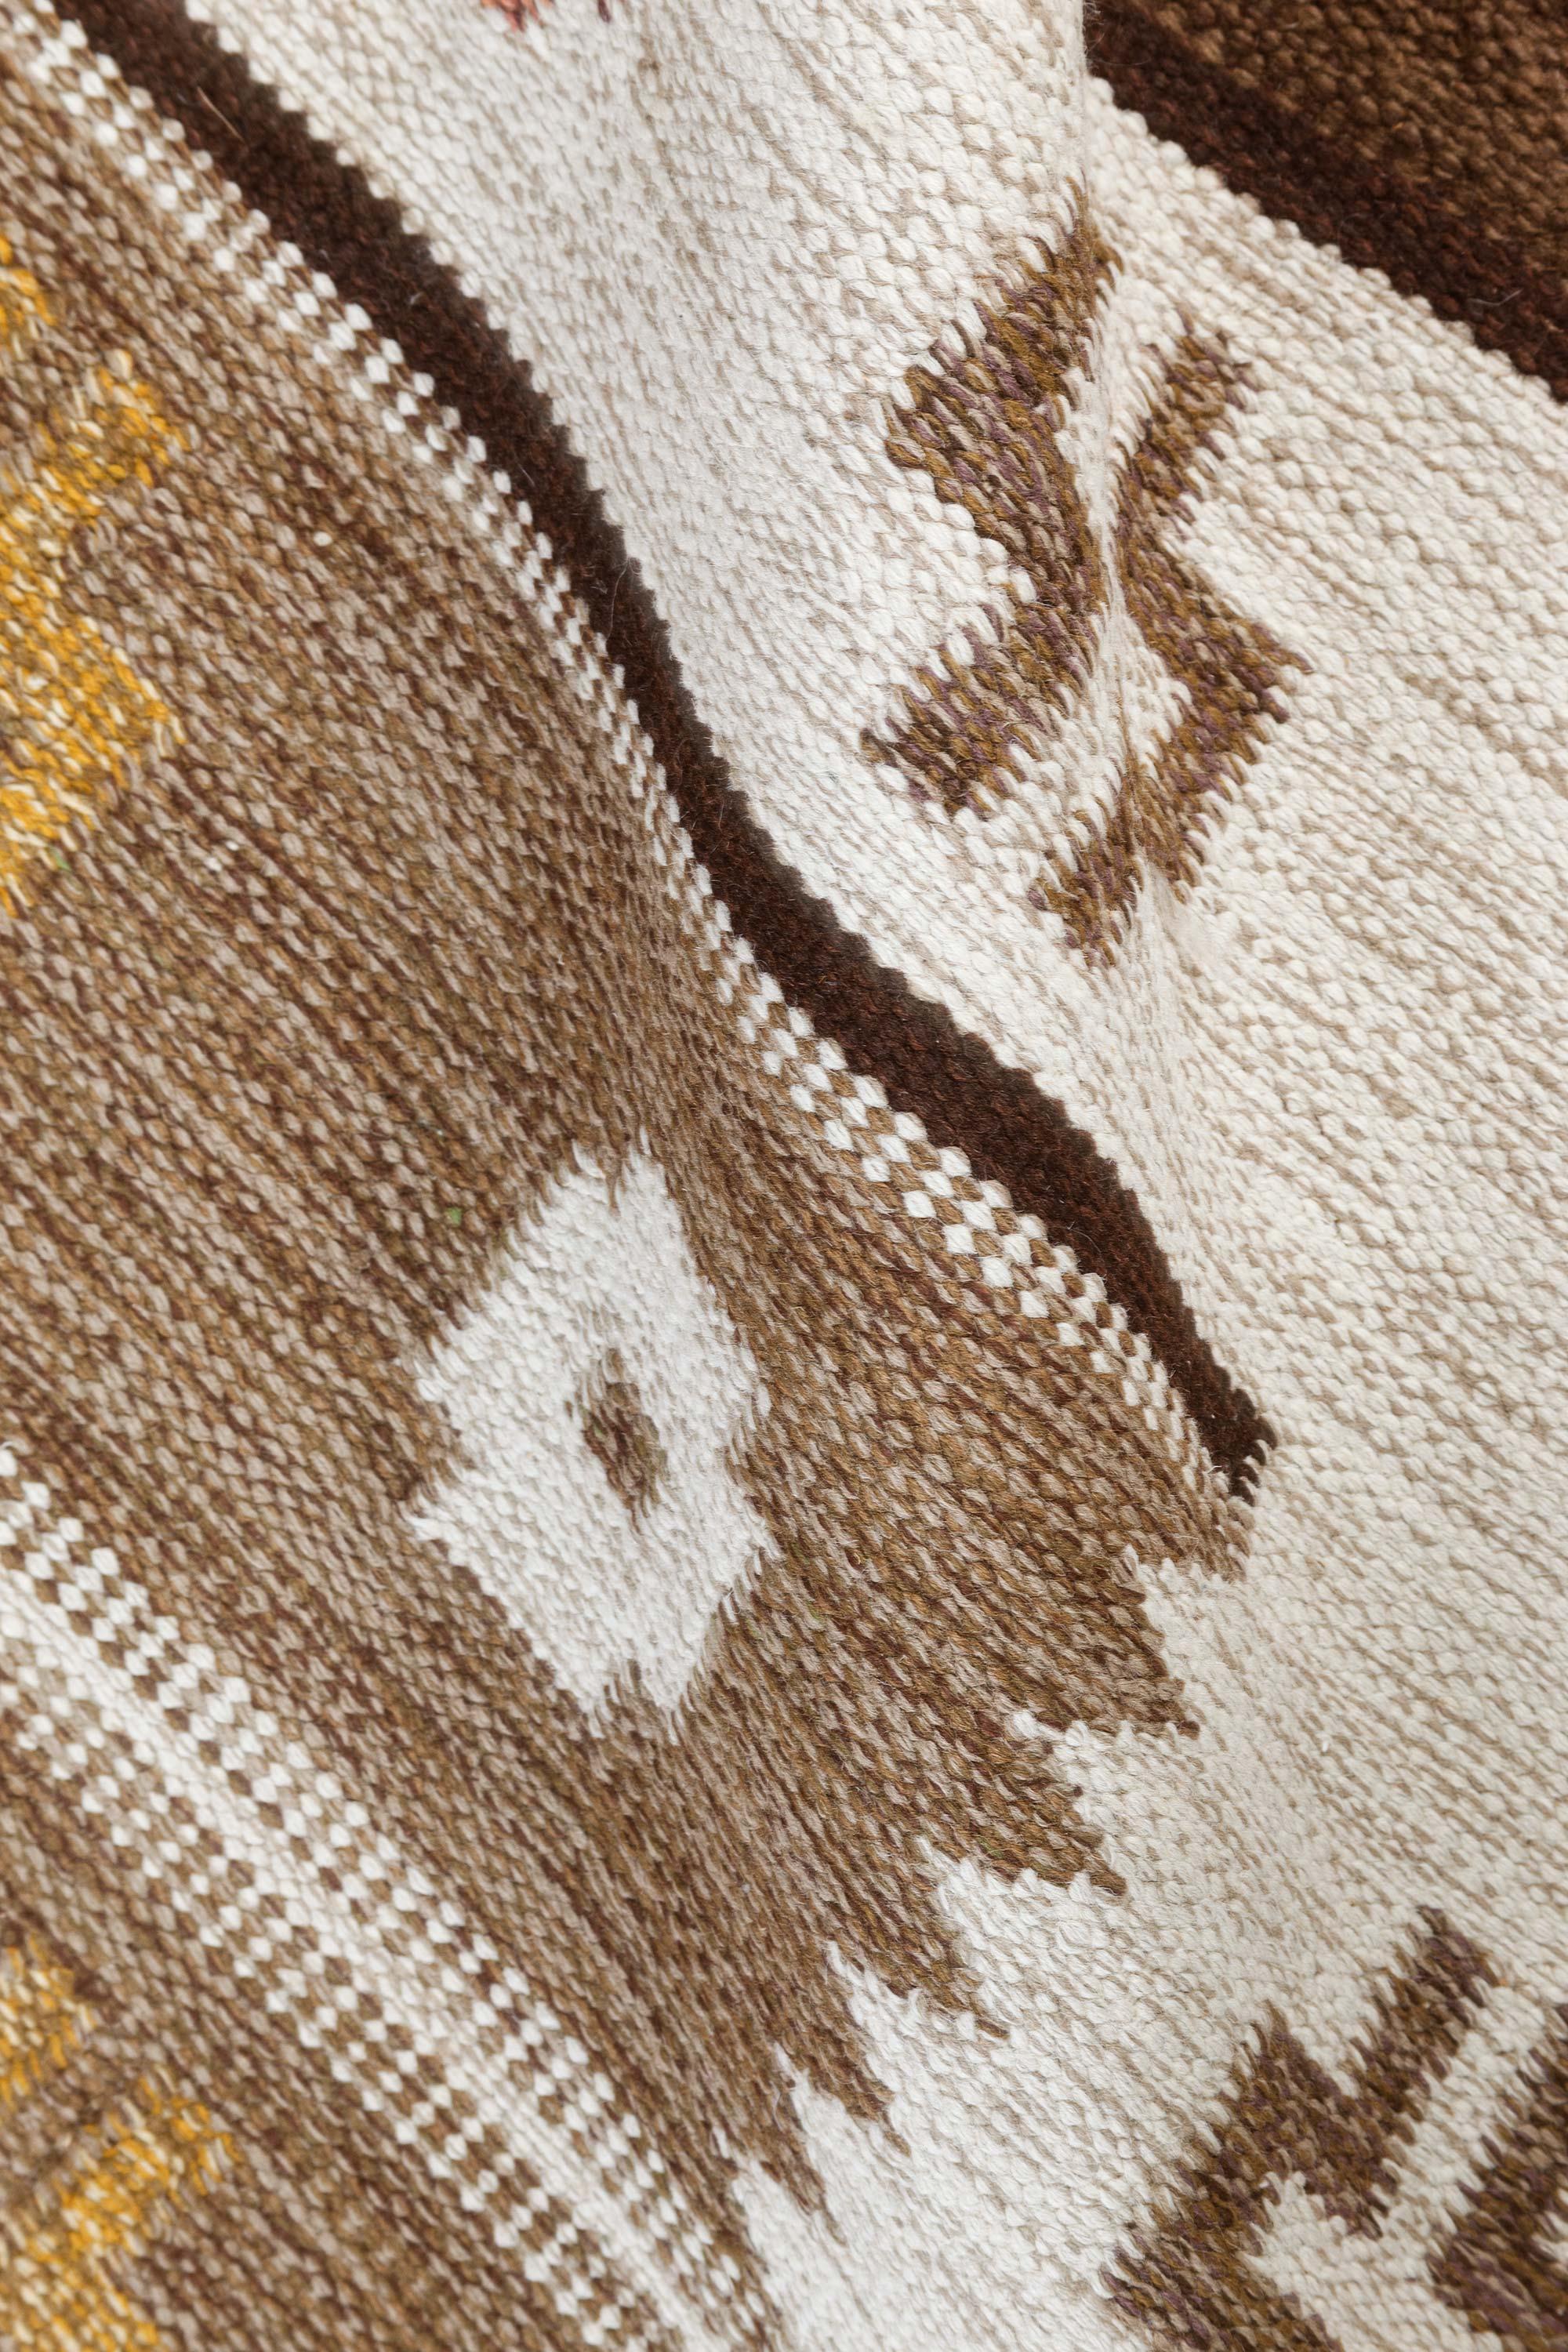 Mid-20th century geometric brown, ivory, yellow Scandinavian handmade wool rug
Size: 4'6